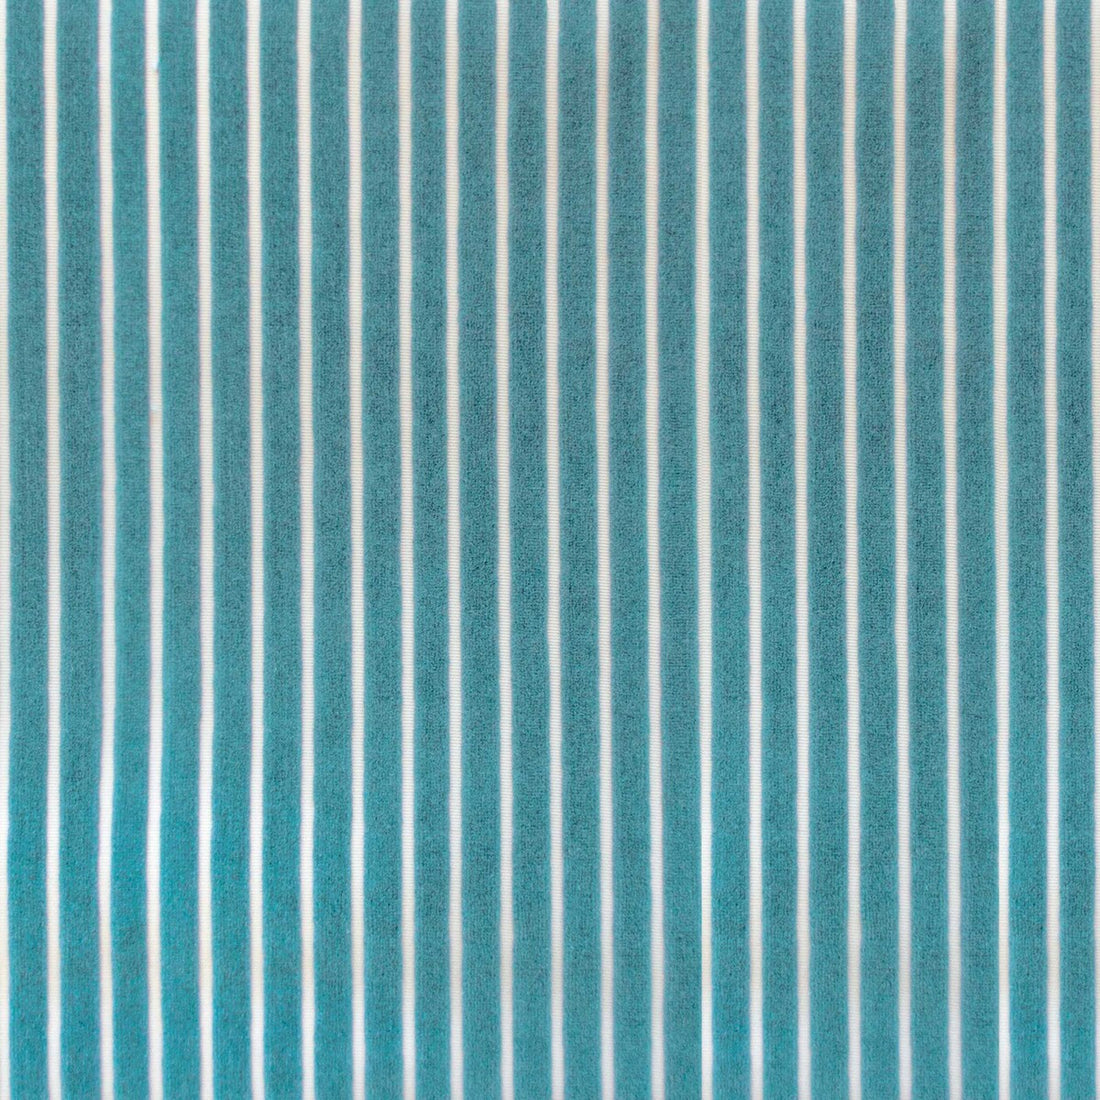 Mayrit fabric in azul agua color - pattern LCT1111.010.0 - by Gaston y Daniela in the Lorenzo Castillo IX Hesperia collection